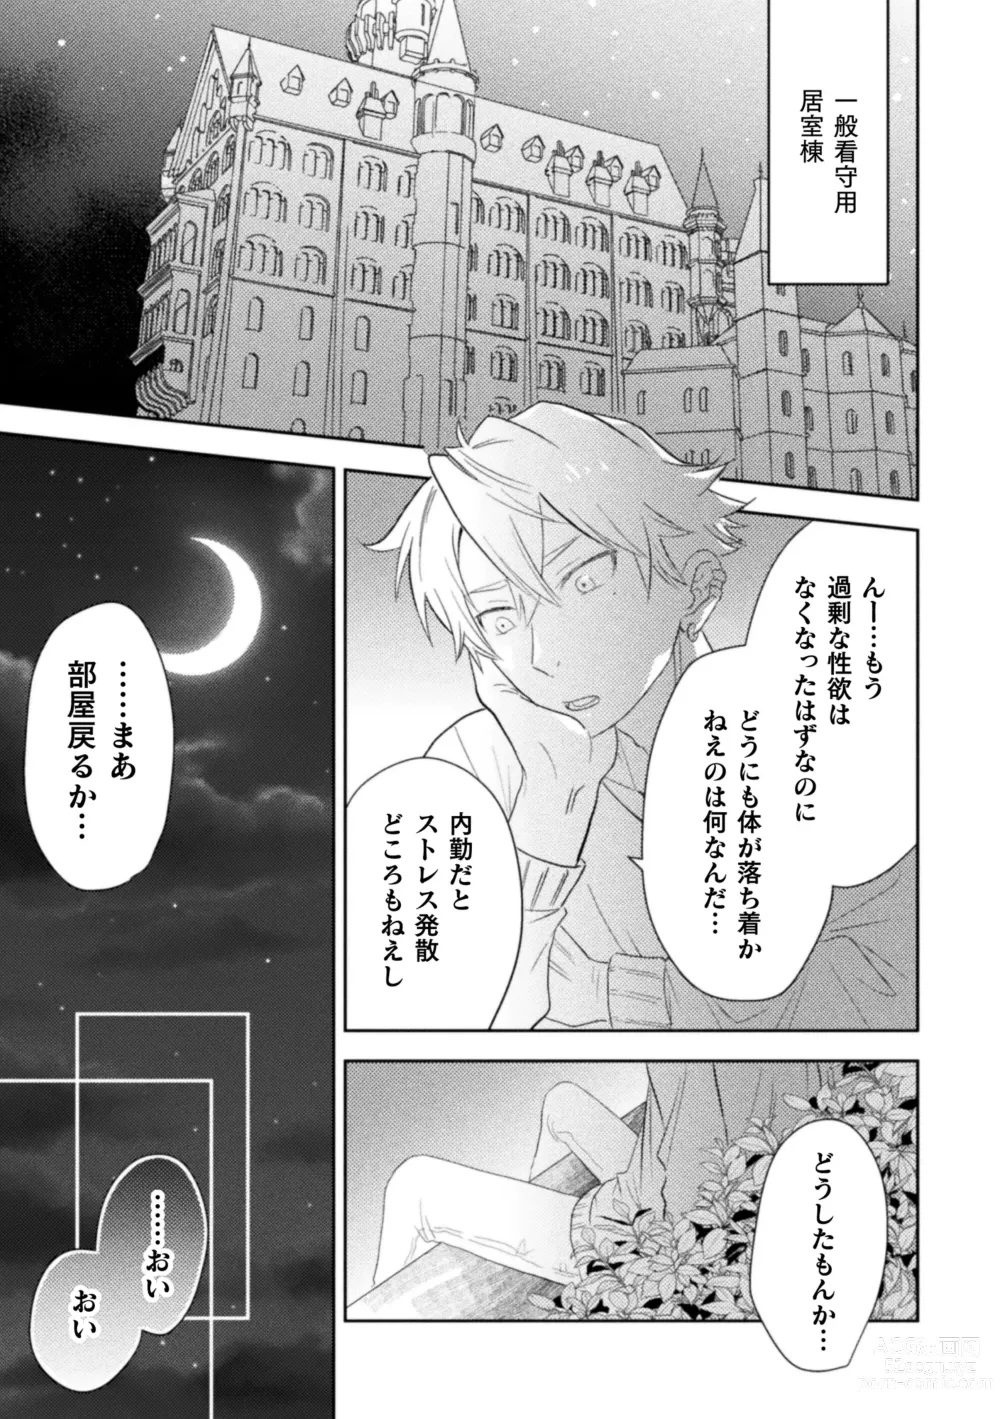 Page 5 of manga Zekkai Rougoku 5 Eien no Rougoku Zenpen